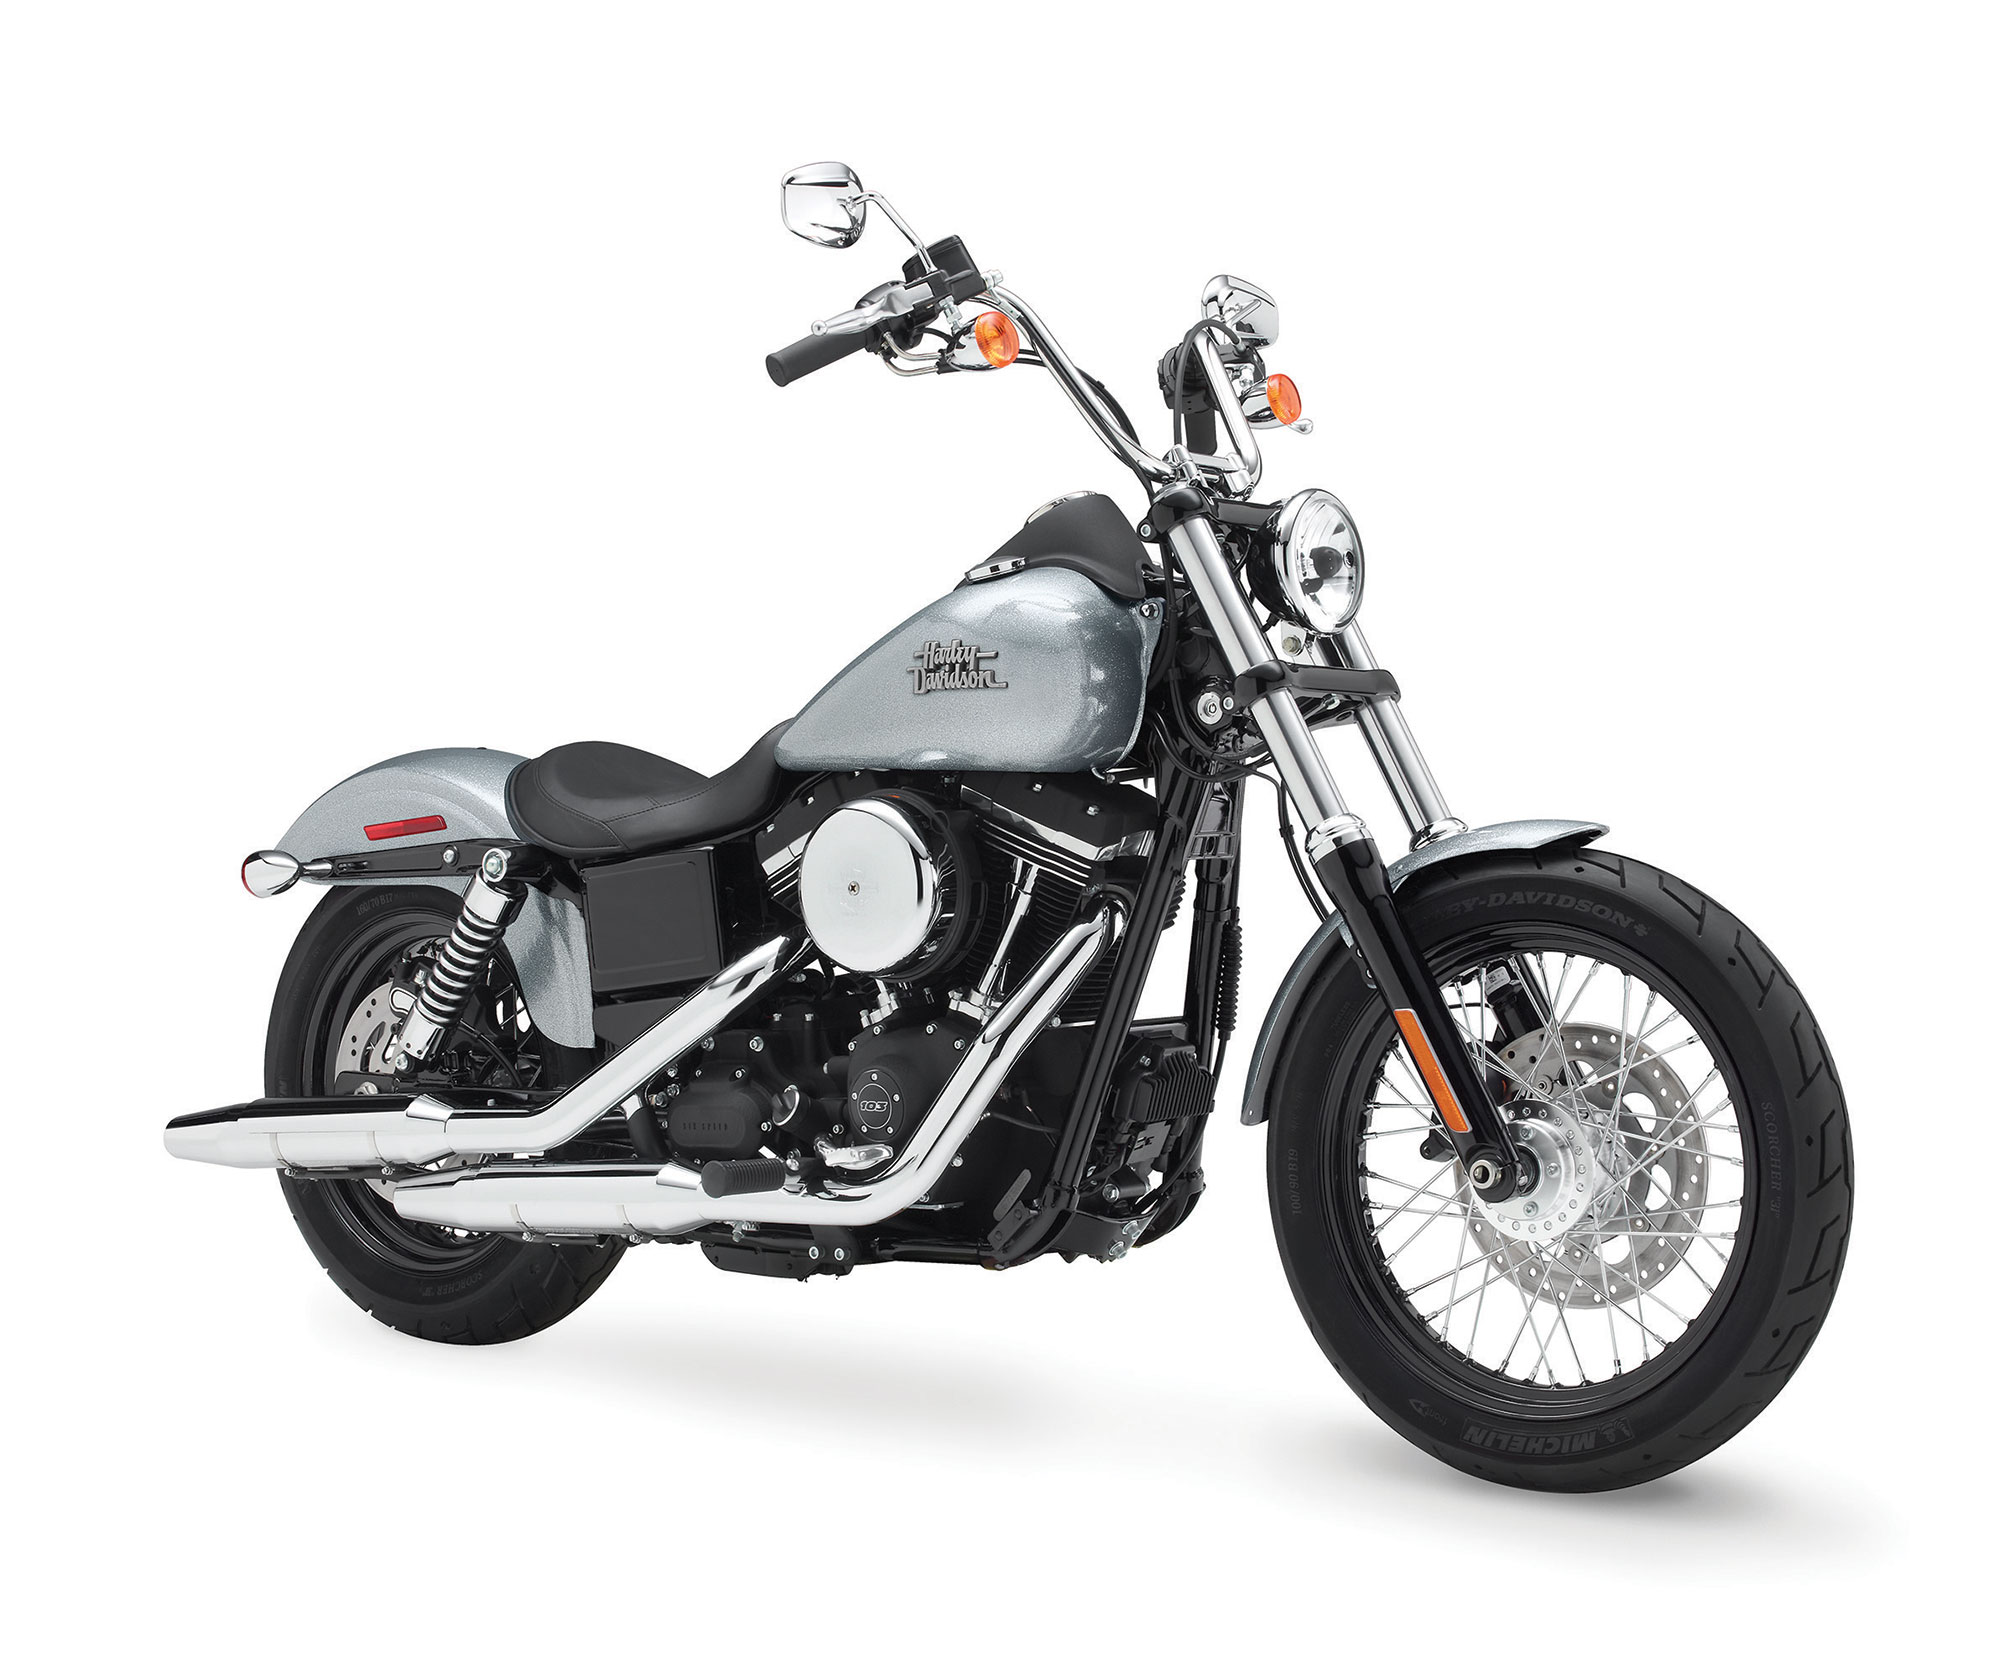 2015 Harley Davidson Fxdb Street Bob Review